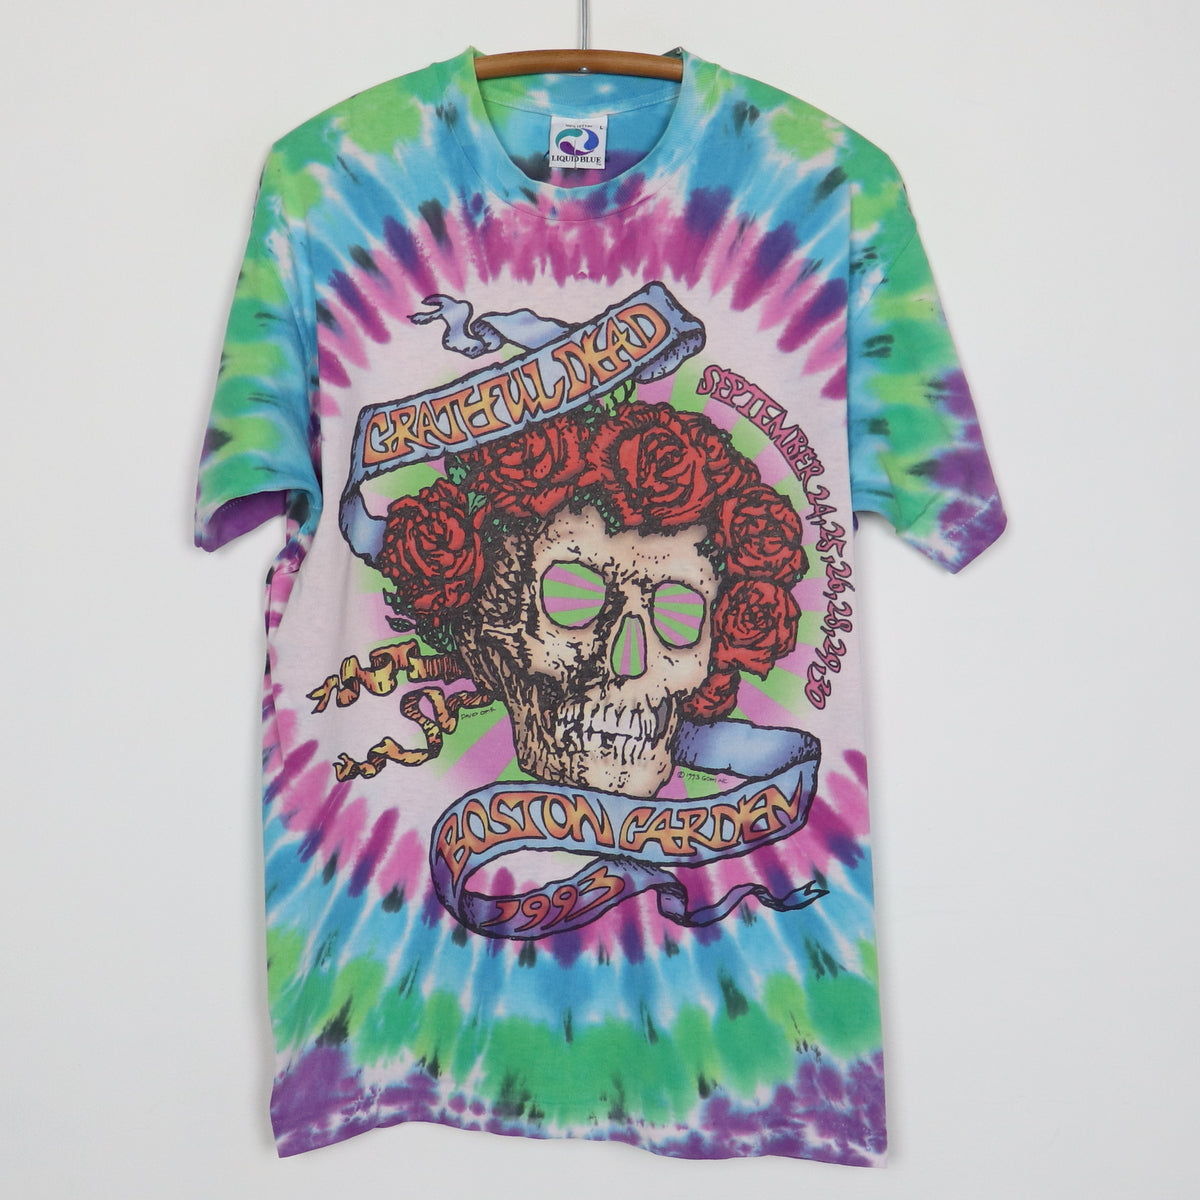 Grateful Dead Boston Garden '91 Tour T Shirt